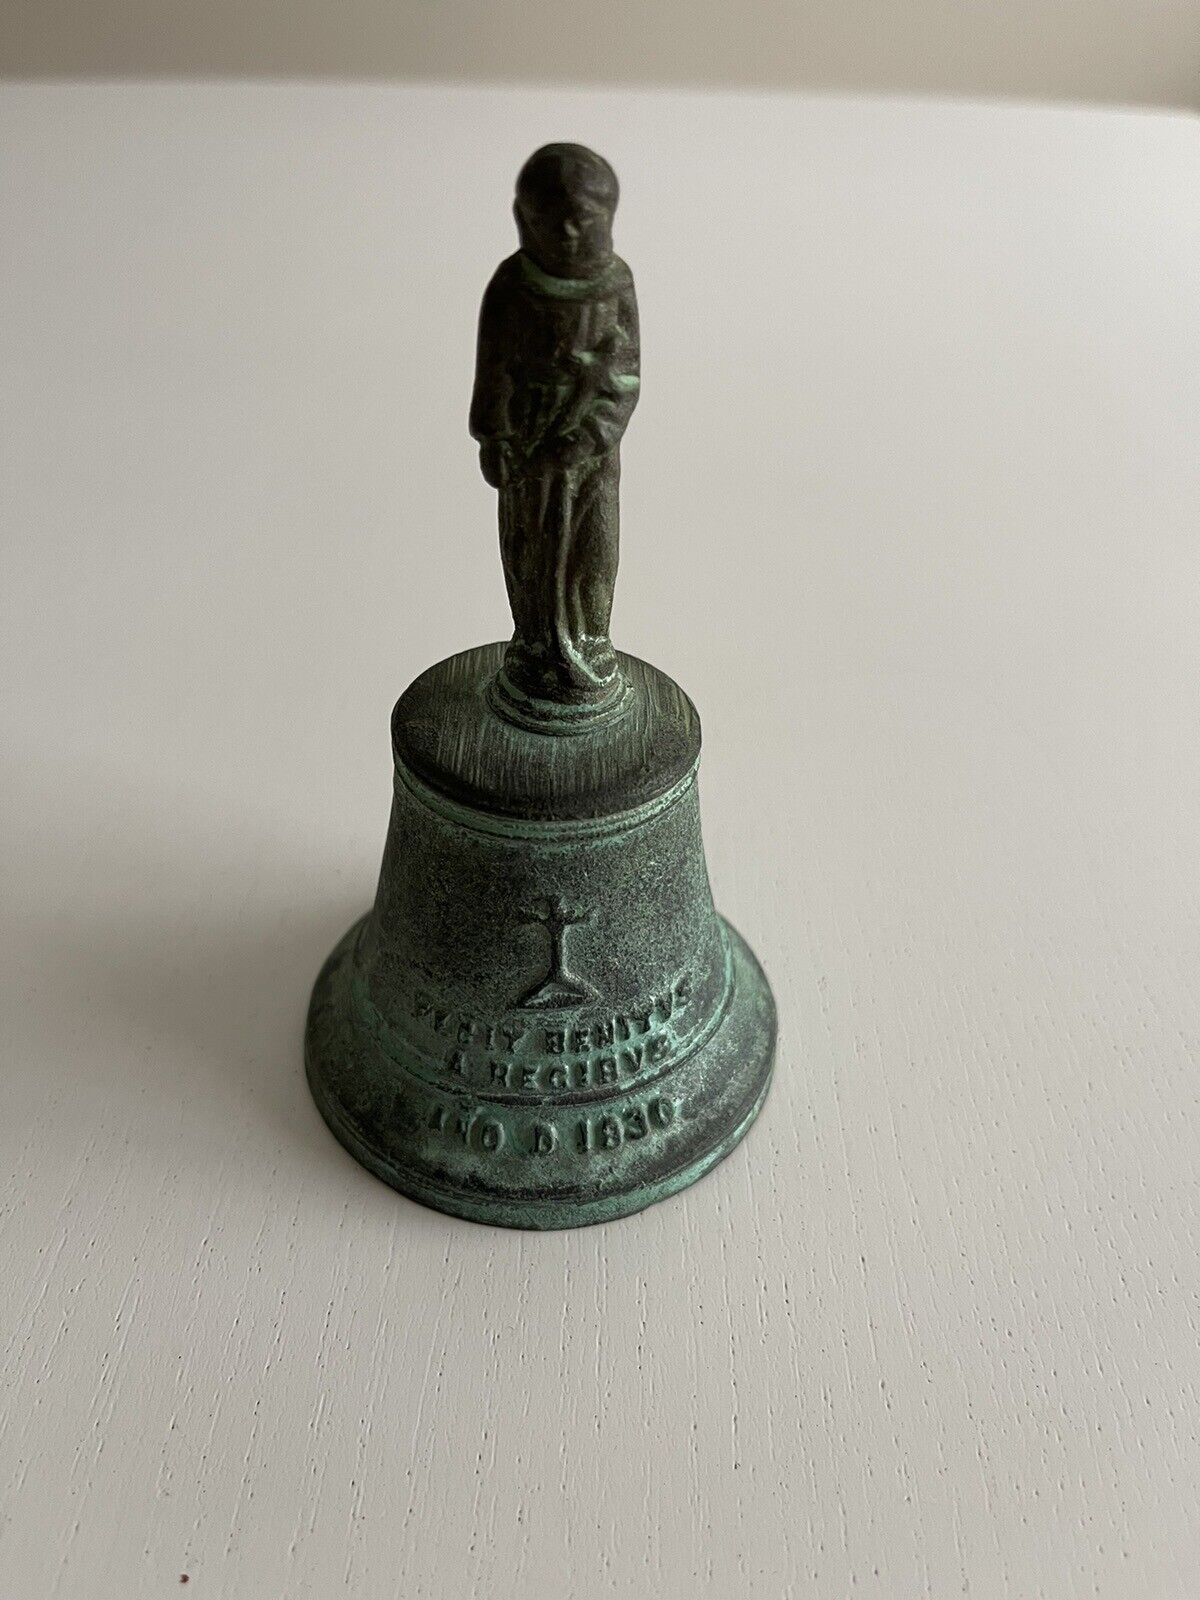 Vintage 1830 Bronze bell Fecit Benitus A Recibus Ano D 1830 Latin Mission Cross 